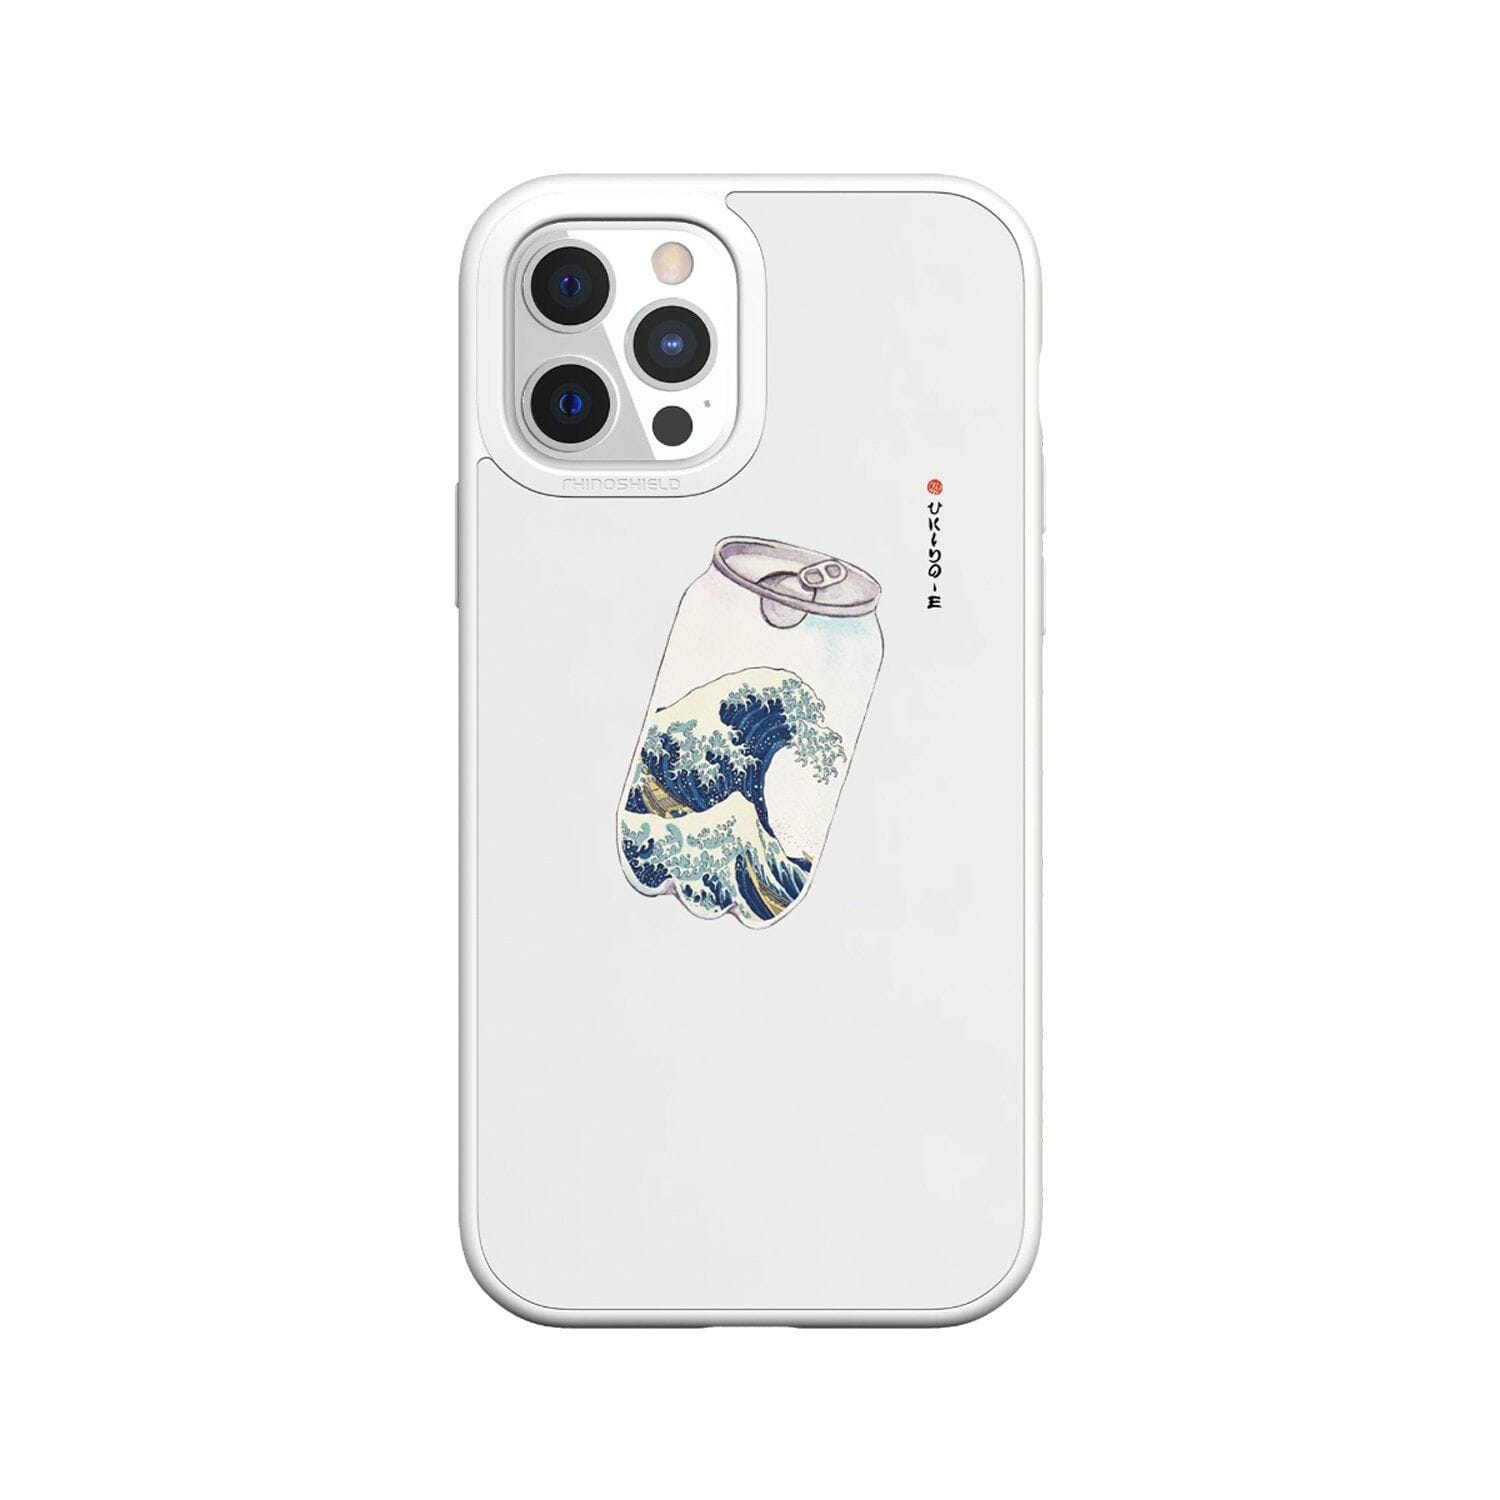 RhinoShield SolidSuit Design Case for iPhone 12 Series (2020) Default RhinoShield iPhone 12 Pro Max 6.7" White/Micro Tribe 